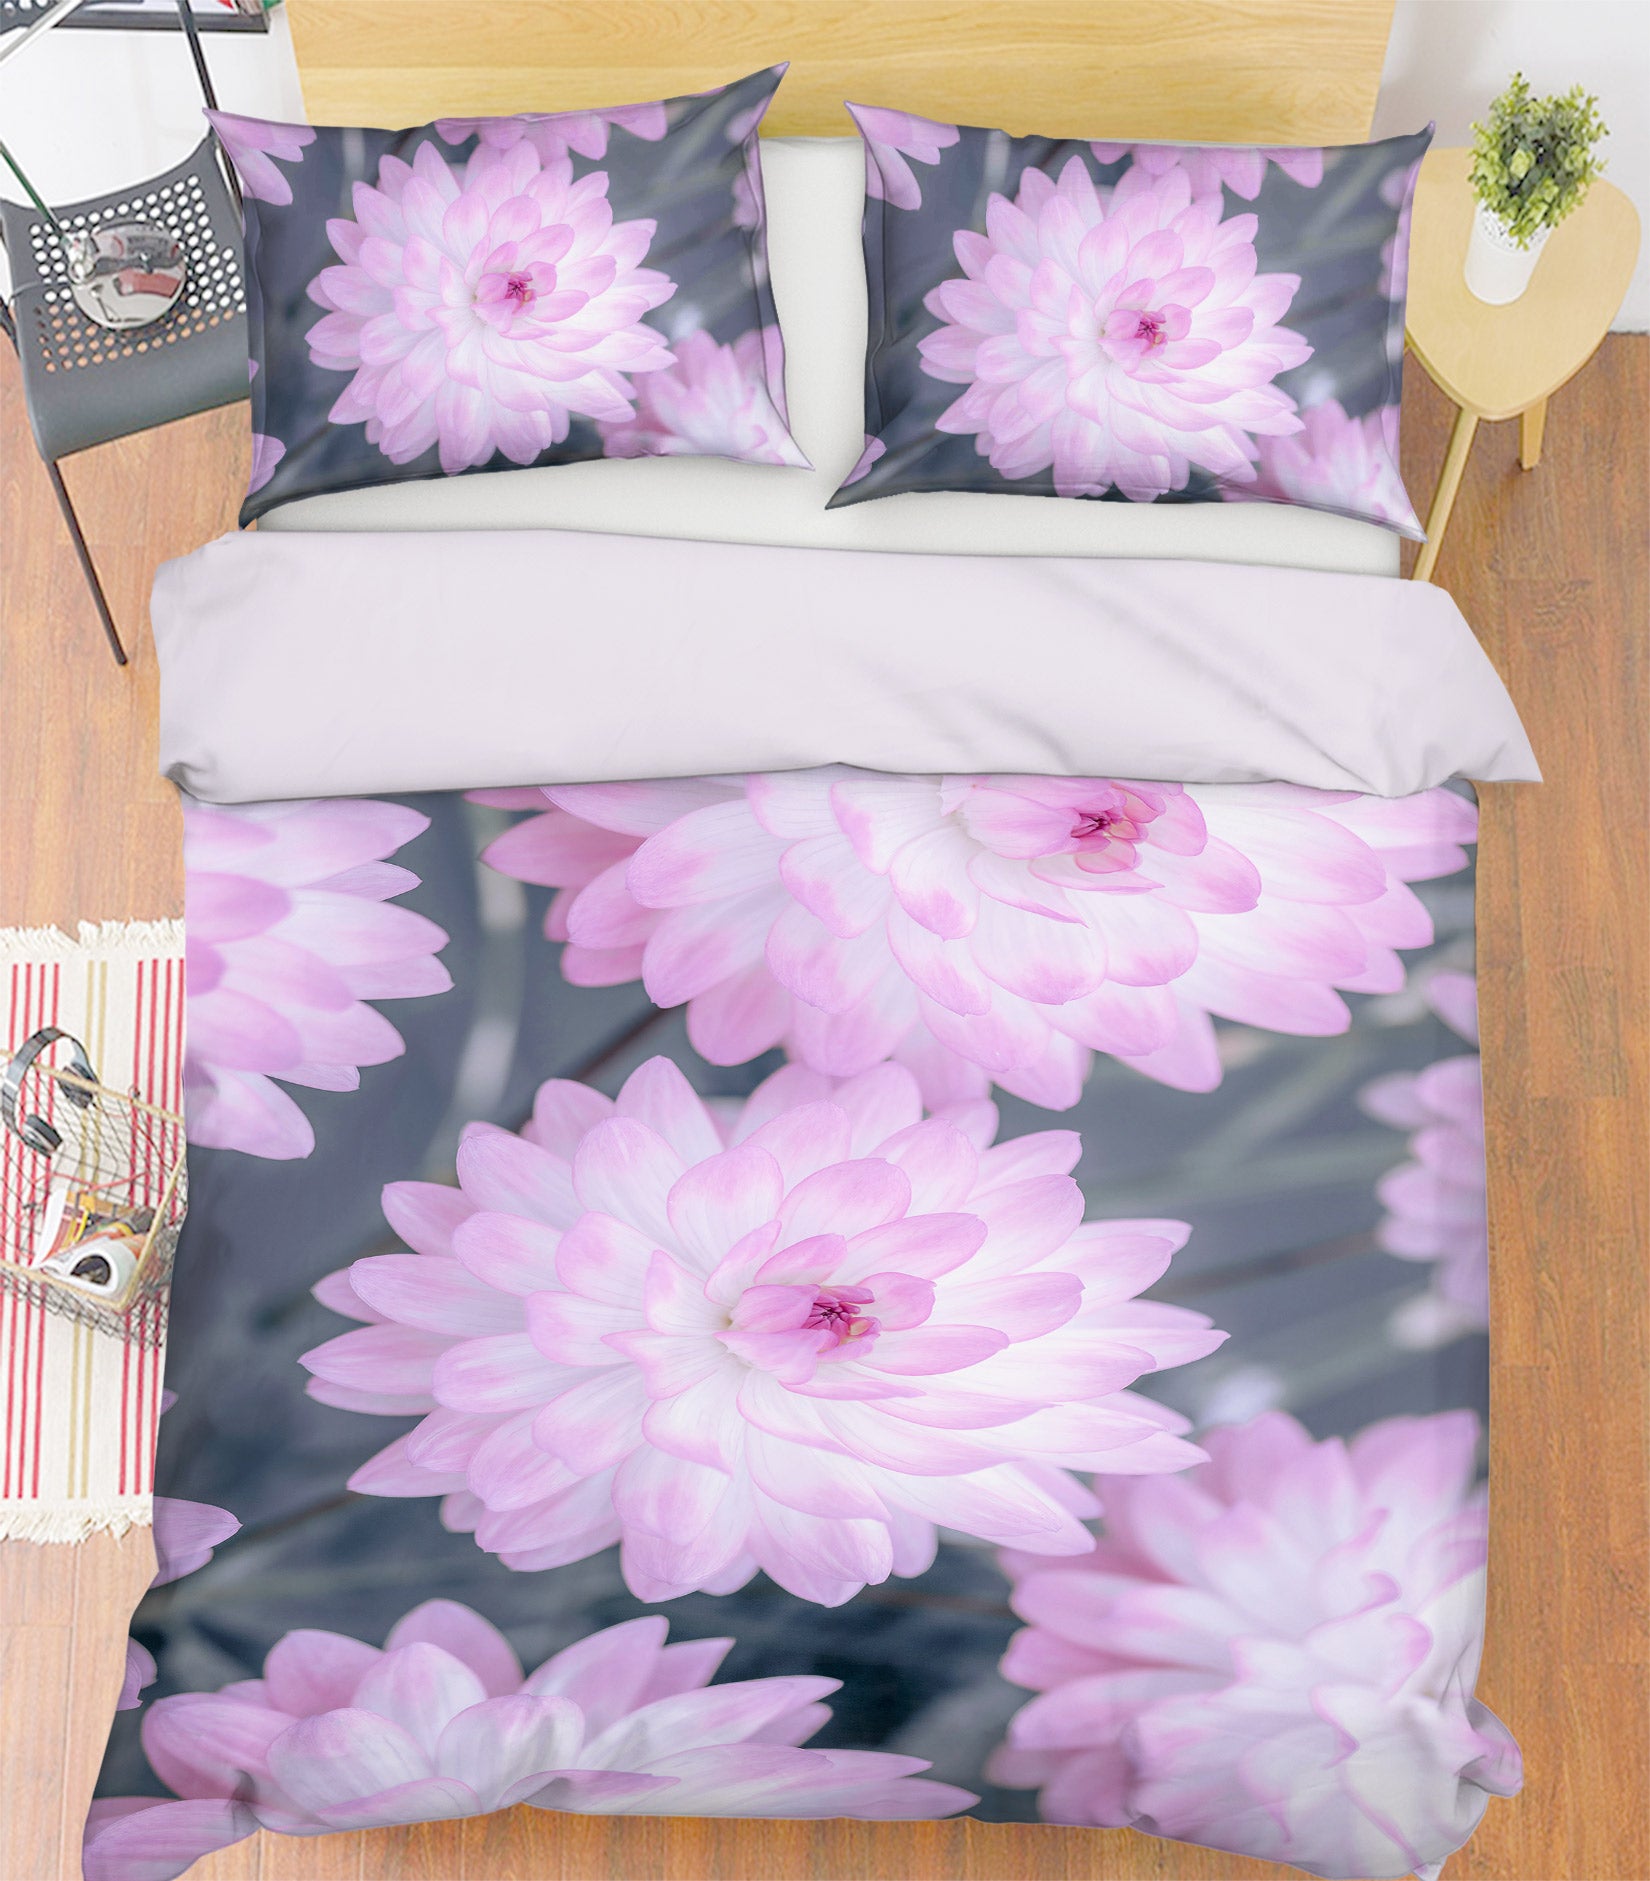 3D Pink Flower 6910 Assaf Frank Bedding Bed Pillowcases Quilt Cover Duvet Cover